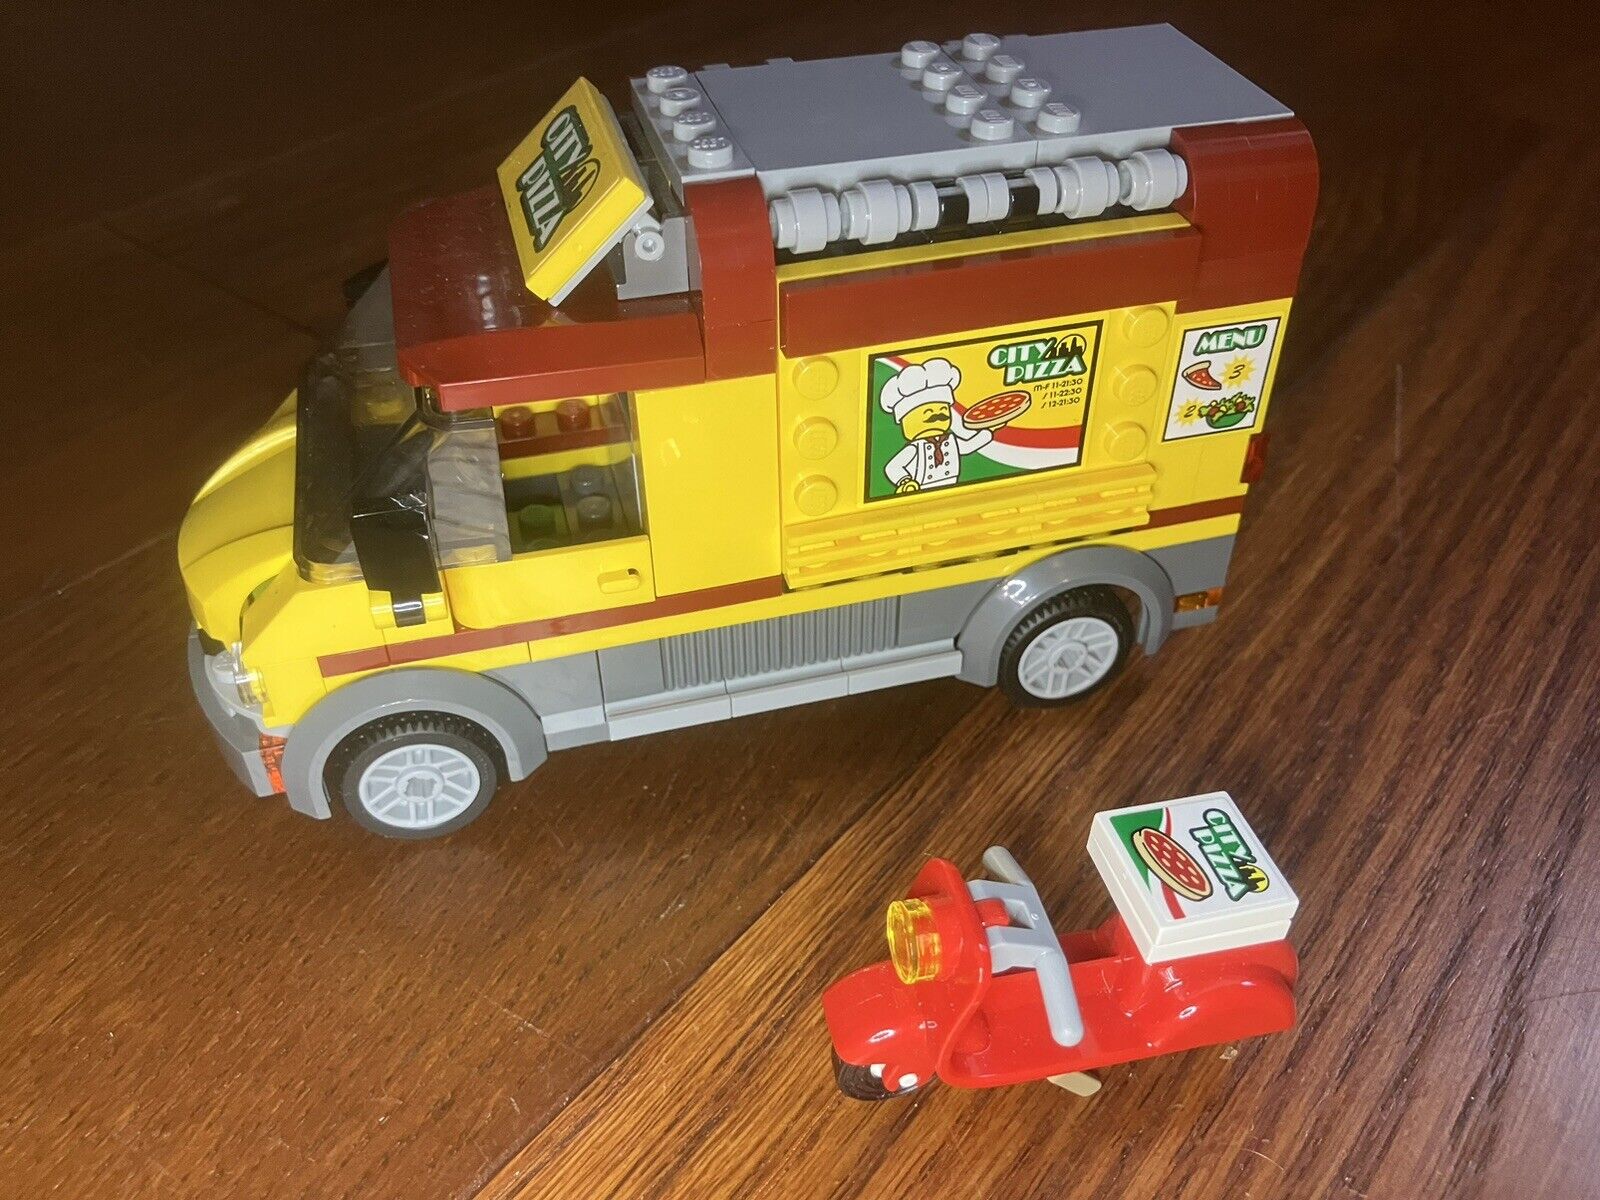 LEGO CITY: 60150 Pizza Van - Near Complete